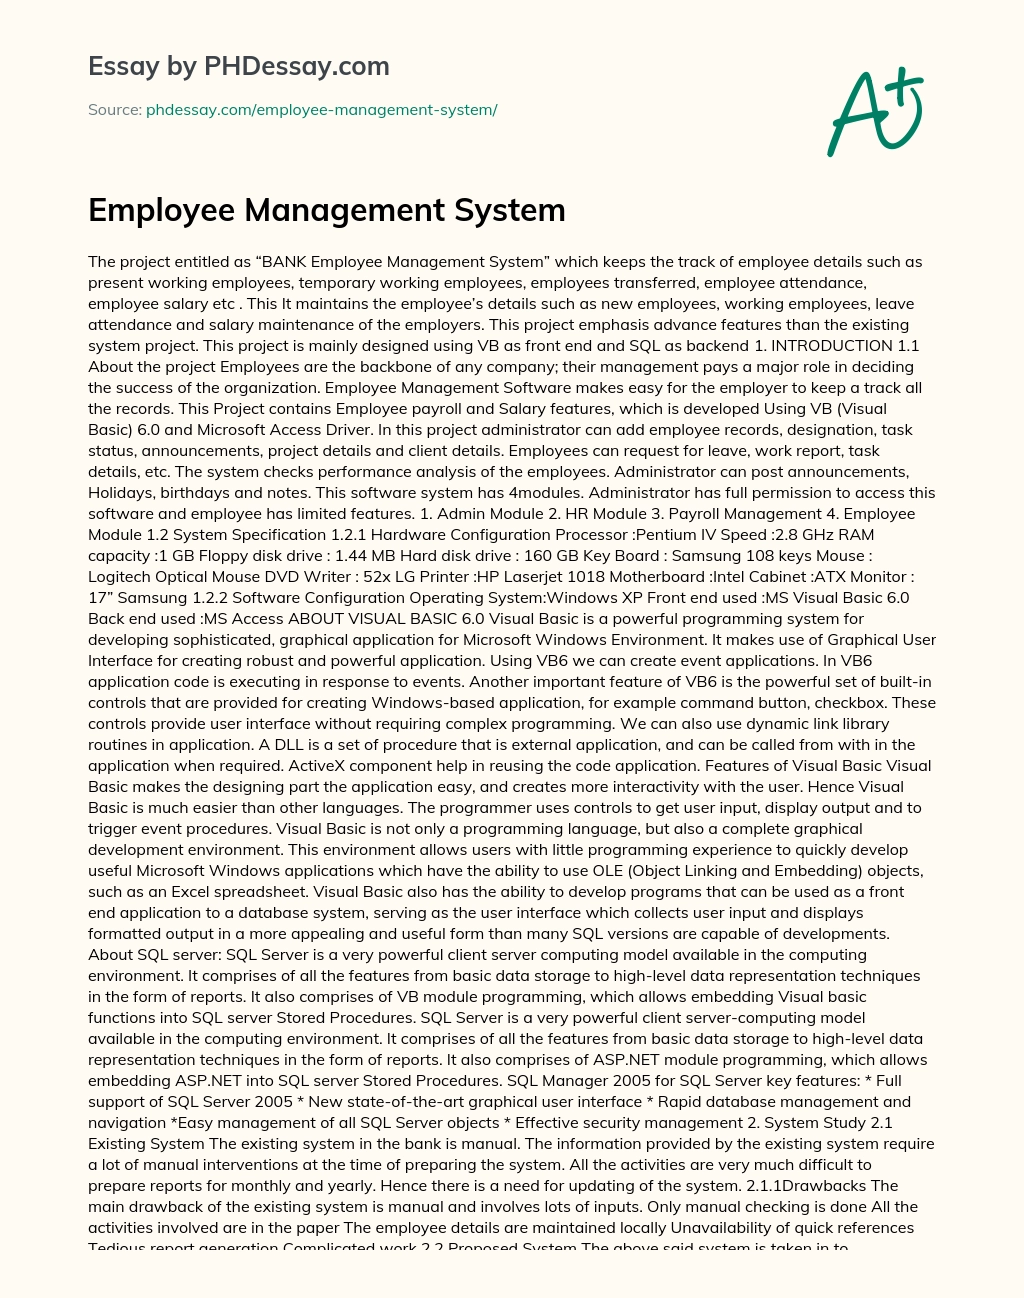 Employee Management System essay